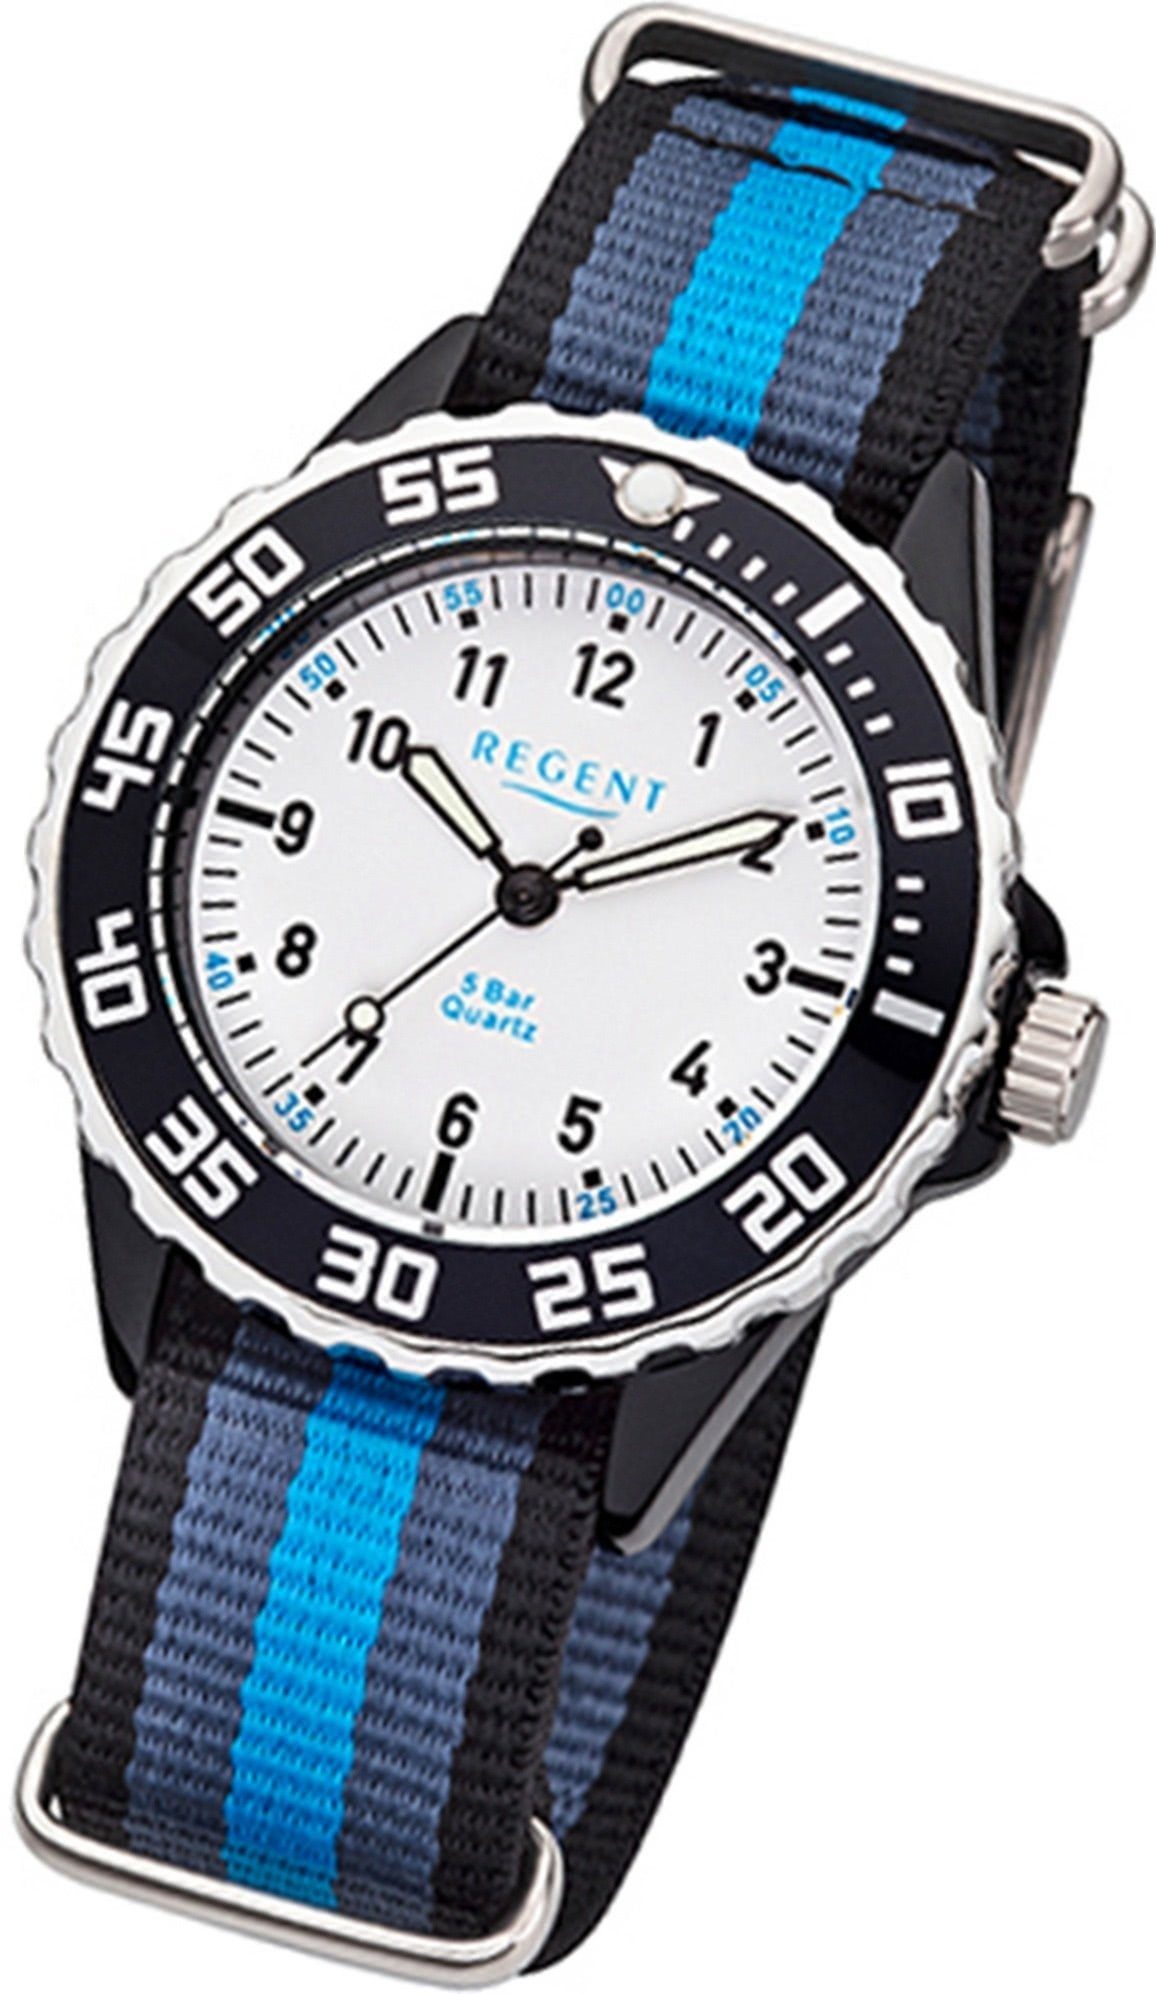 Regent Quarzuhr Regent Textil Kinder-Jugend Uhr F-1204, Kinderuhr Textilarmband blau, schwarz, rundes Gehäuse, mittel (35mm)